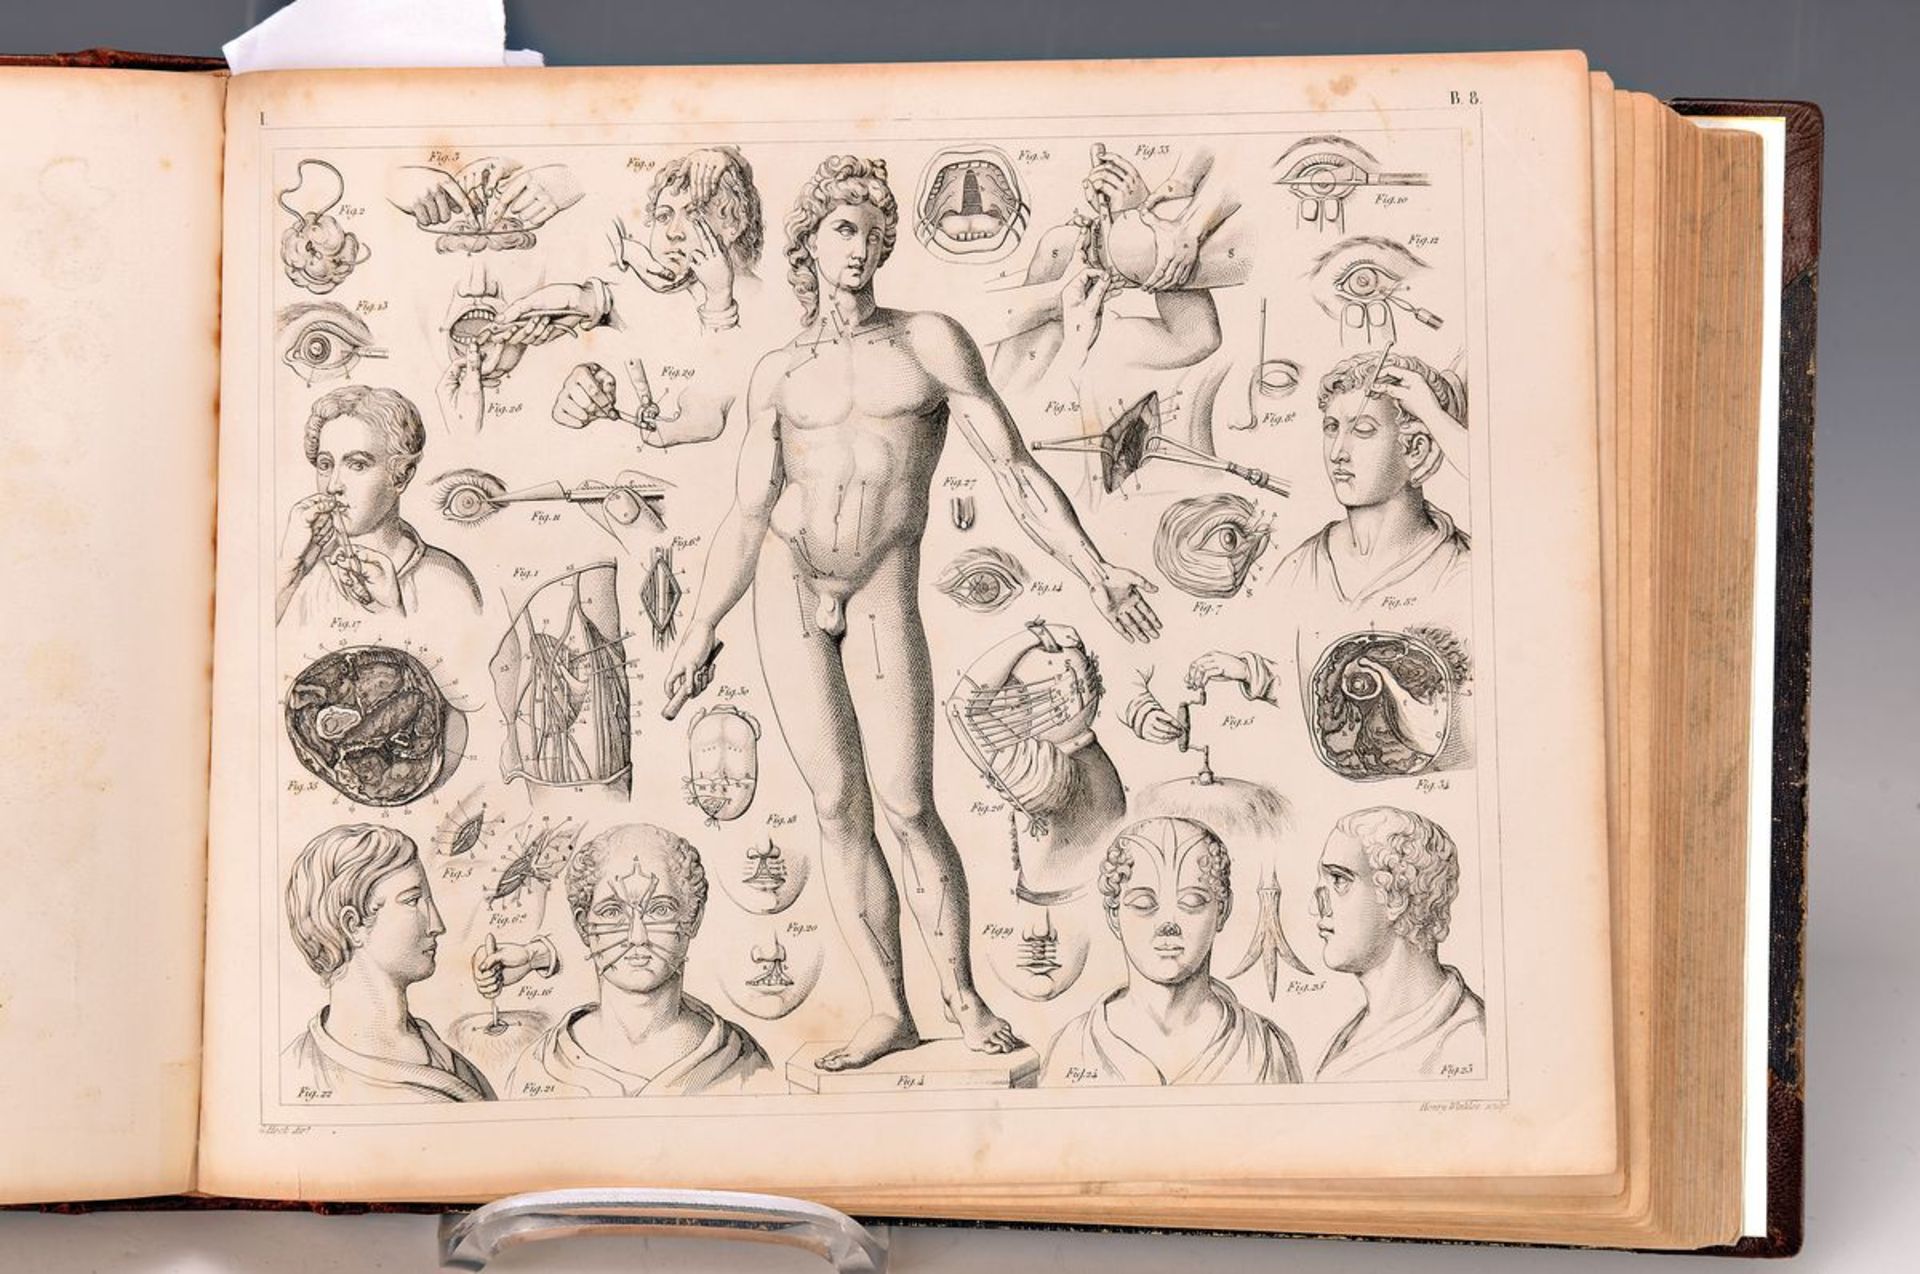 Bilder-Atlas zum Conversationslexikon Mathematische Naturwissenschaften, 1856, 141 Tafeln nebst